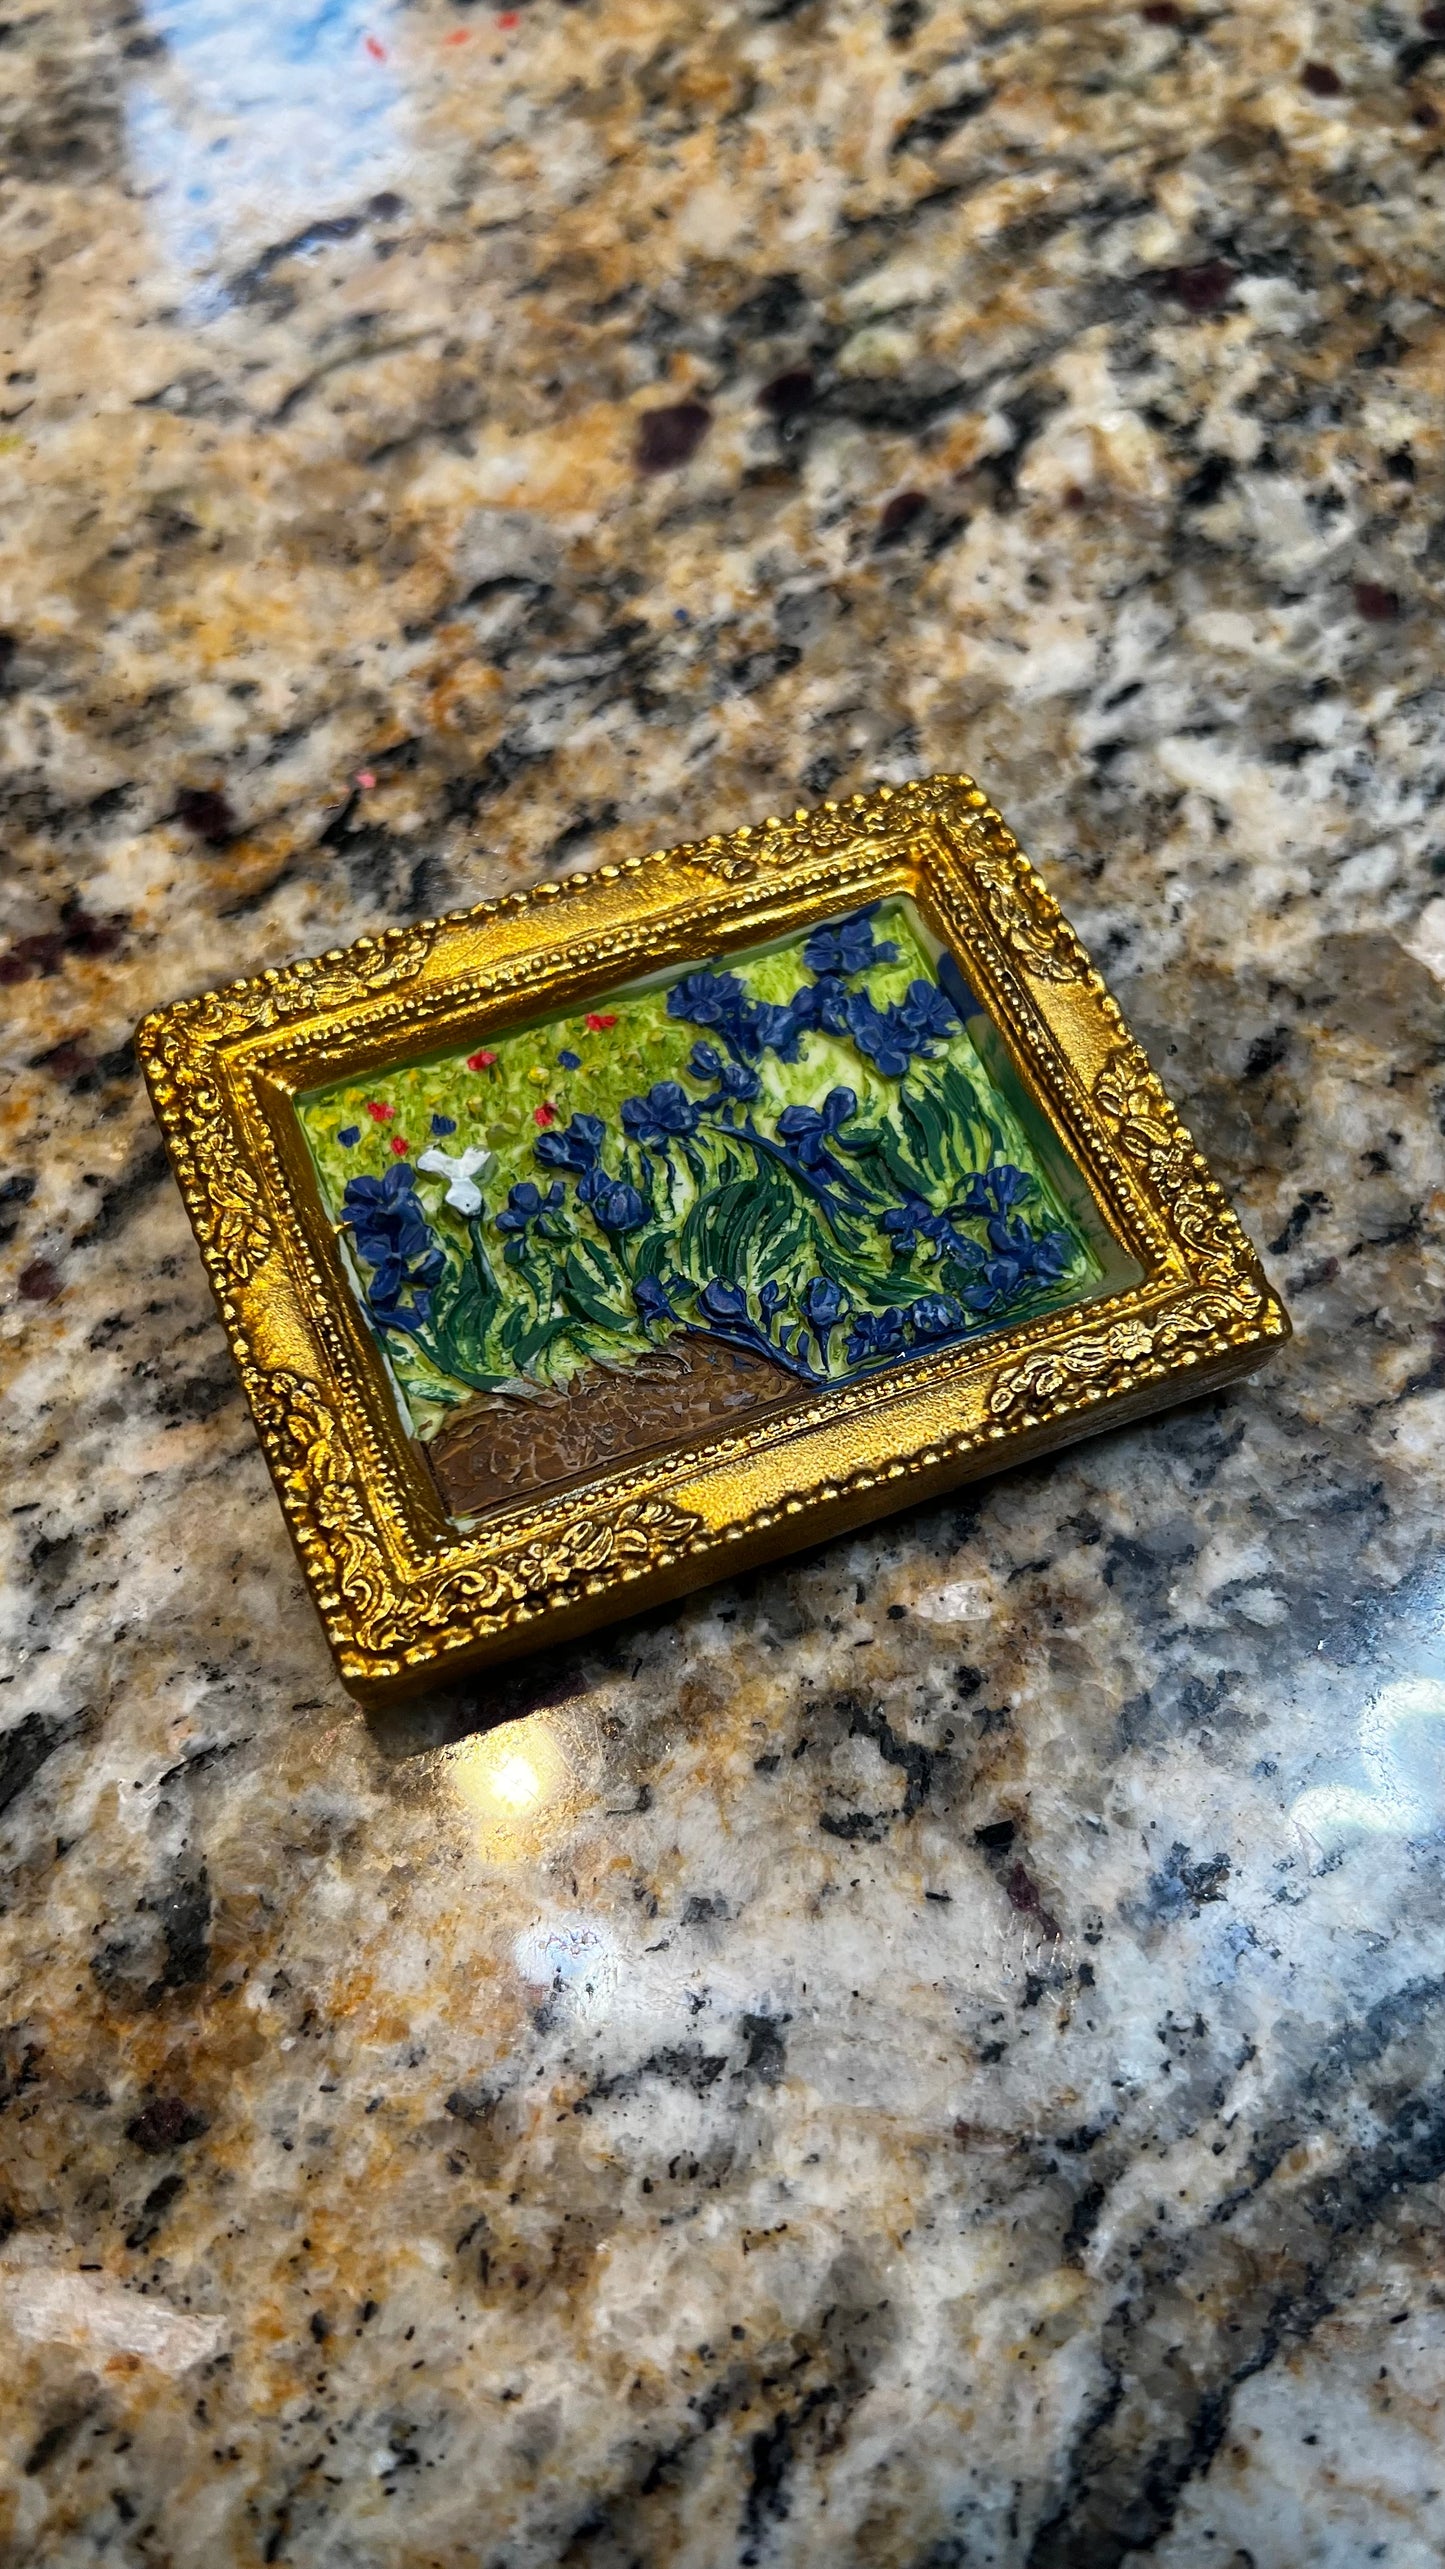 Van Gogh Irises Gold Frame